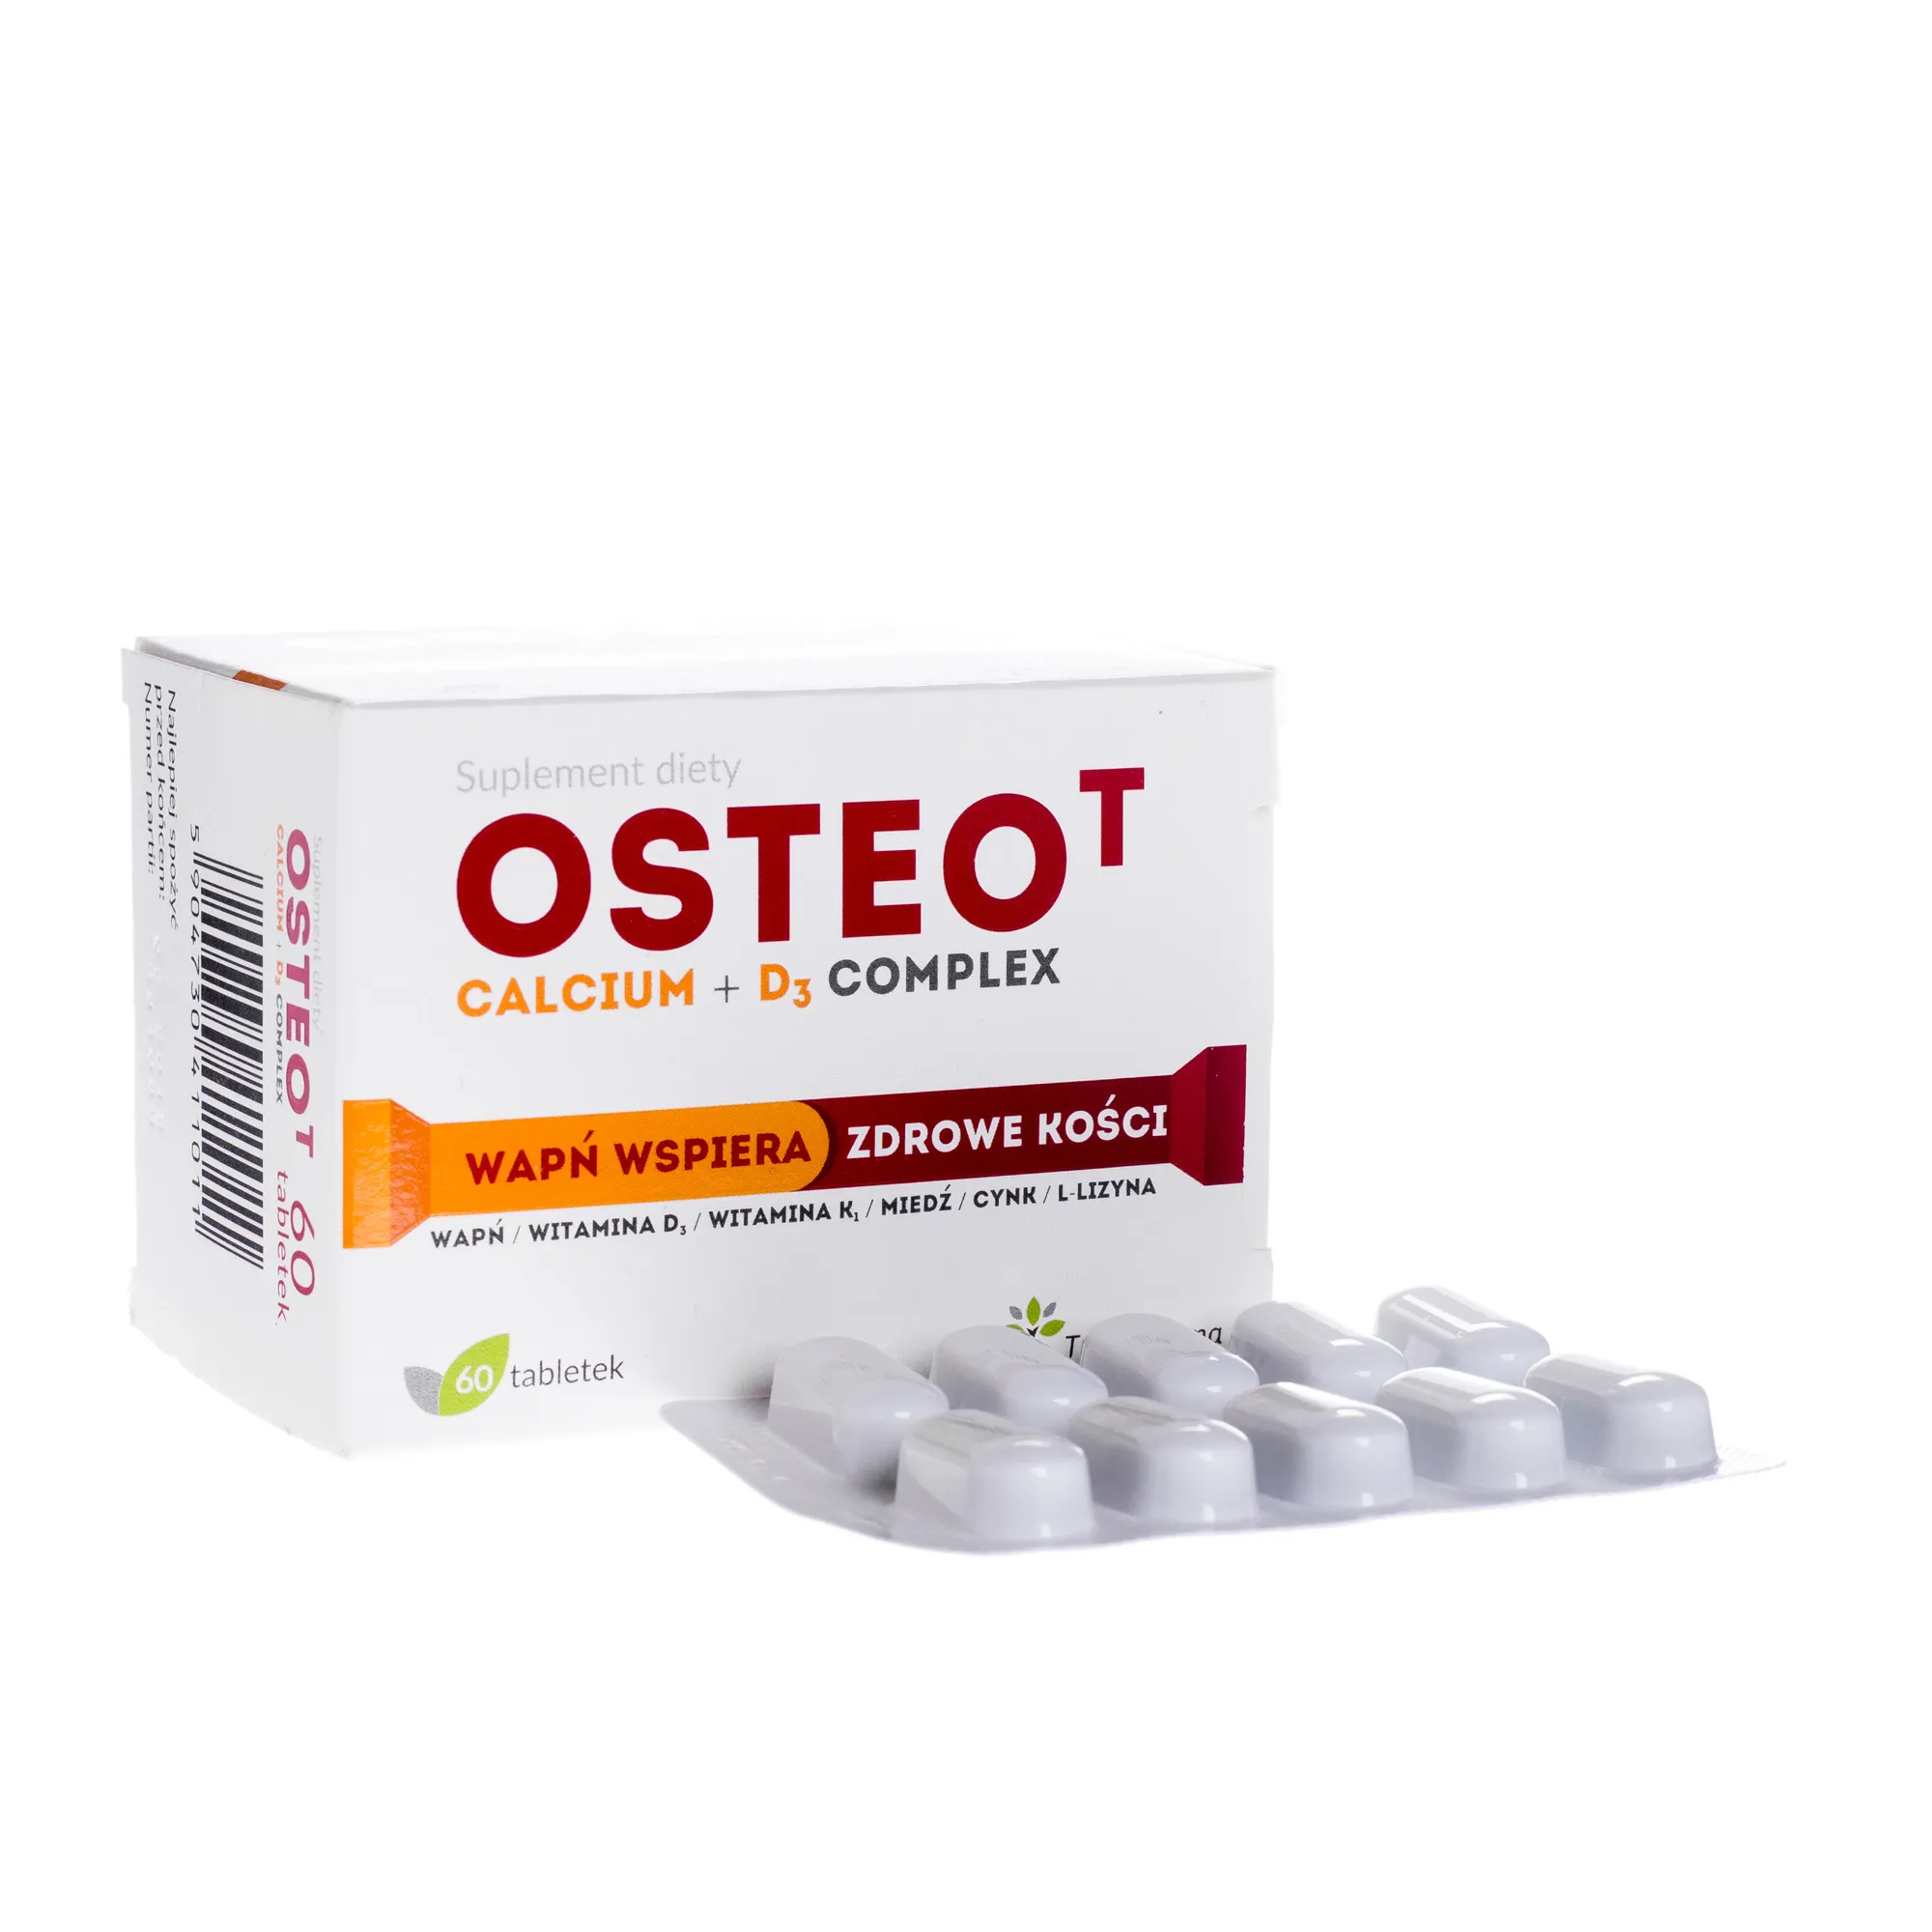 Osteo T, Calcium + D3 Complex, suplement diety, 60 tabletek 